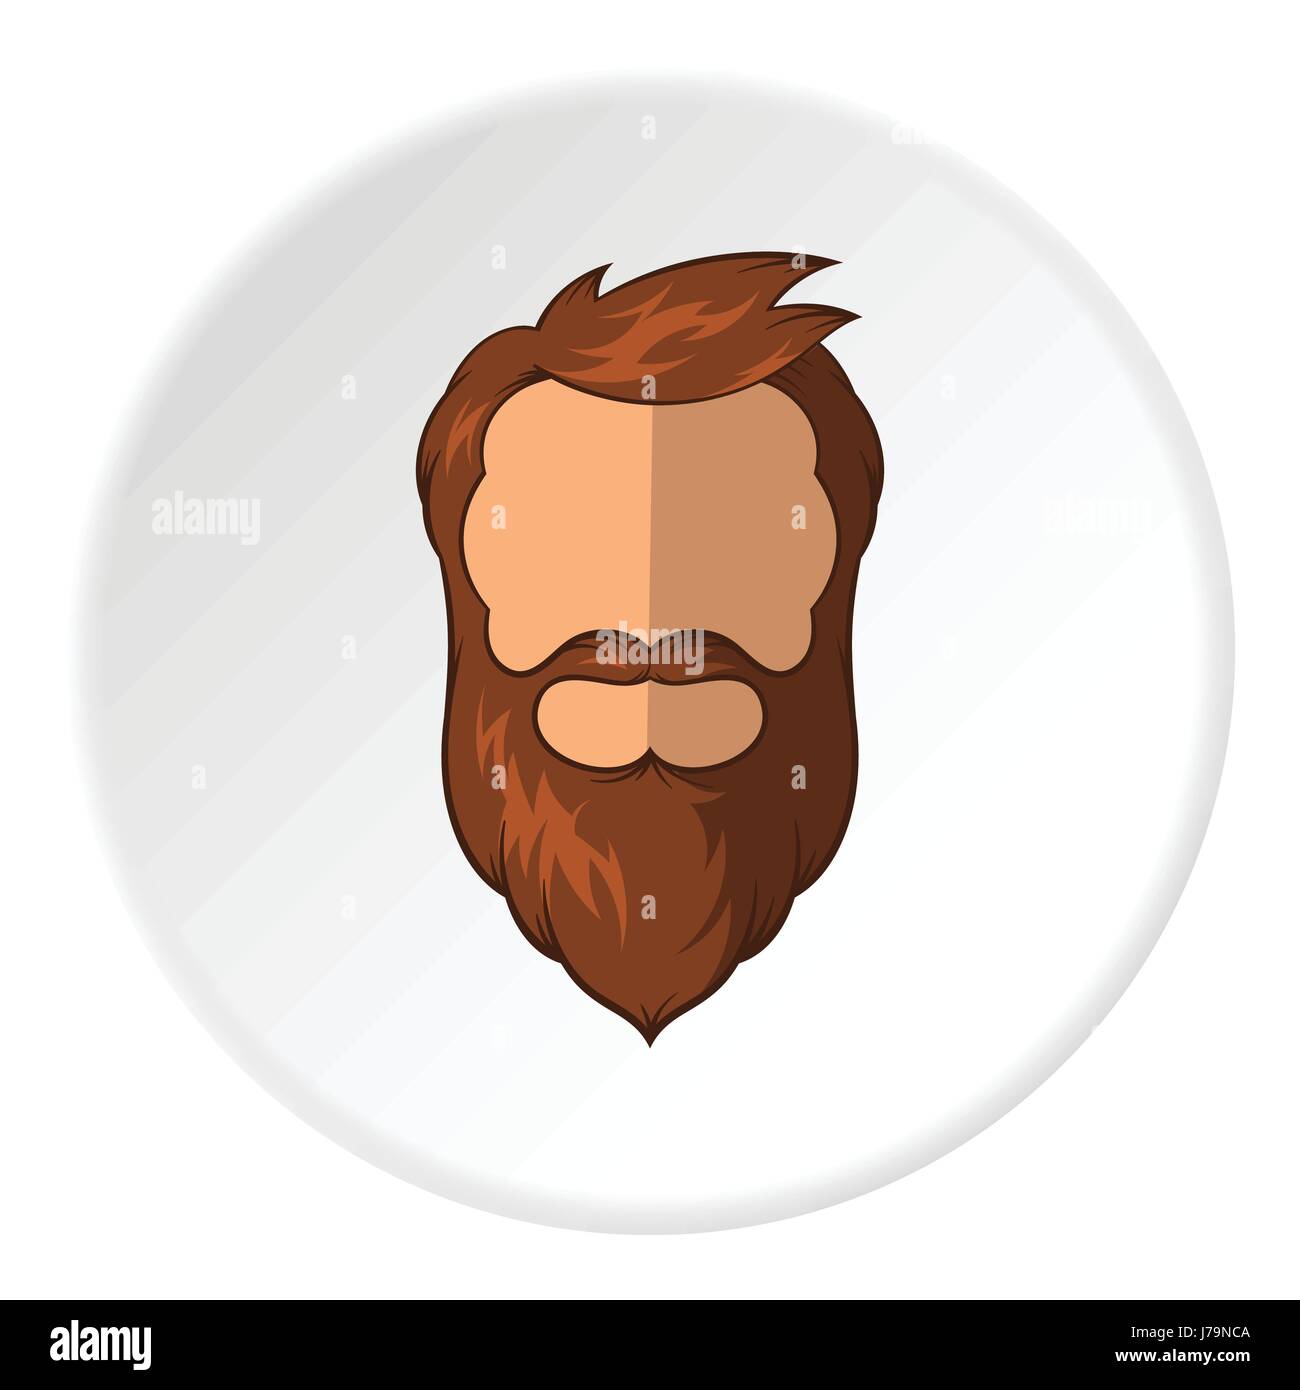 Avatar man with beard icon, cartoon style Stock Vector Image & Art - Alamy